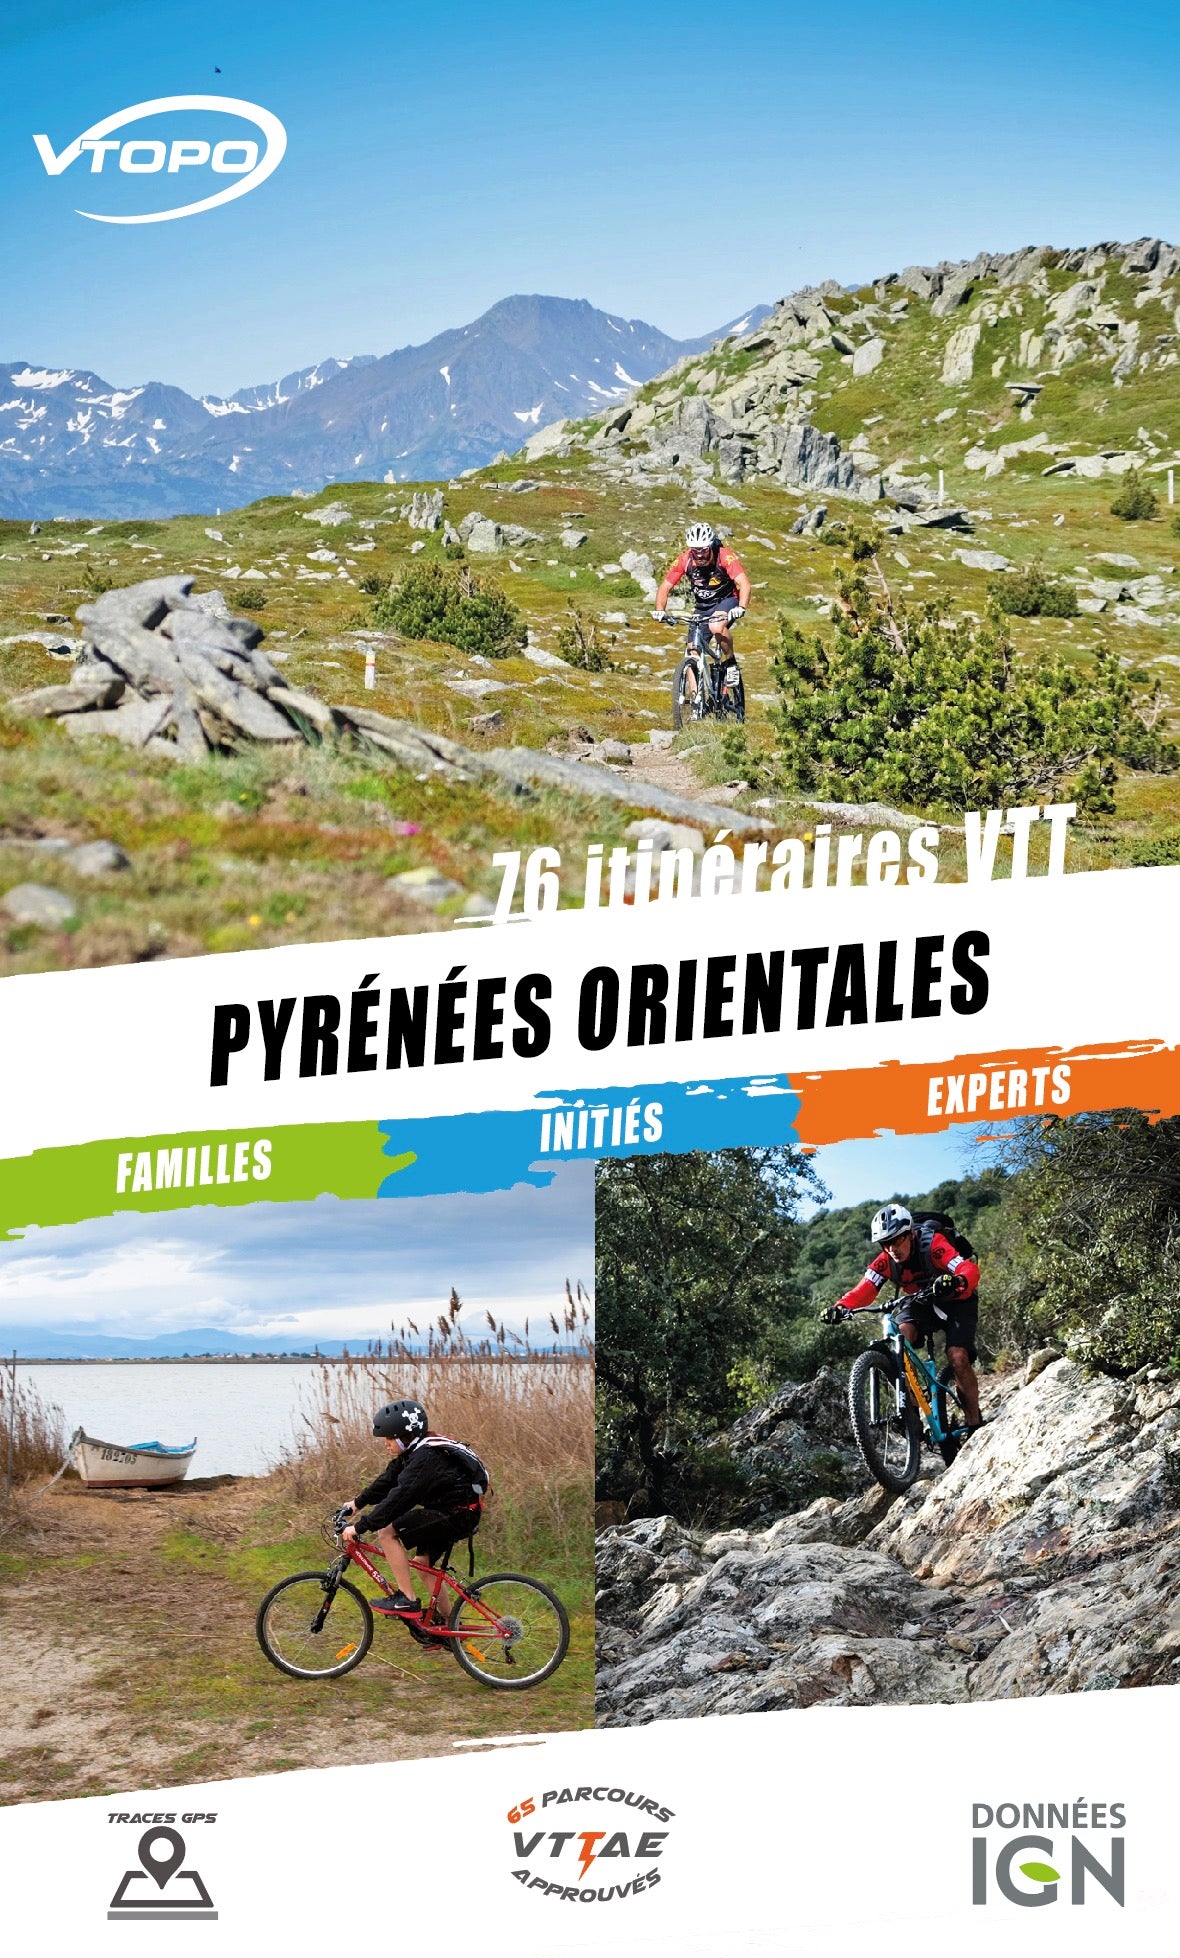 VTOPO MTB Pyrenees Orientales - 2nd edition